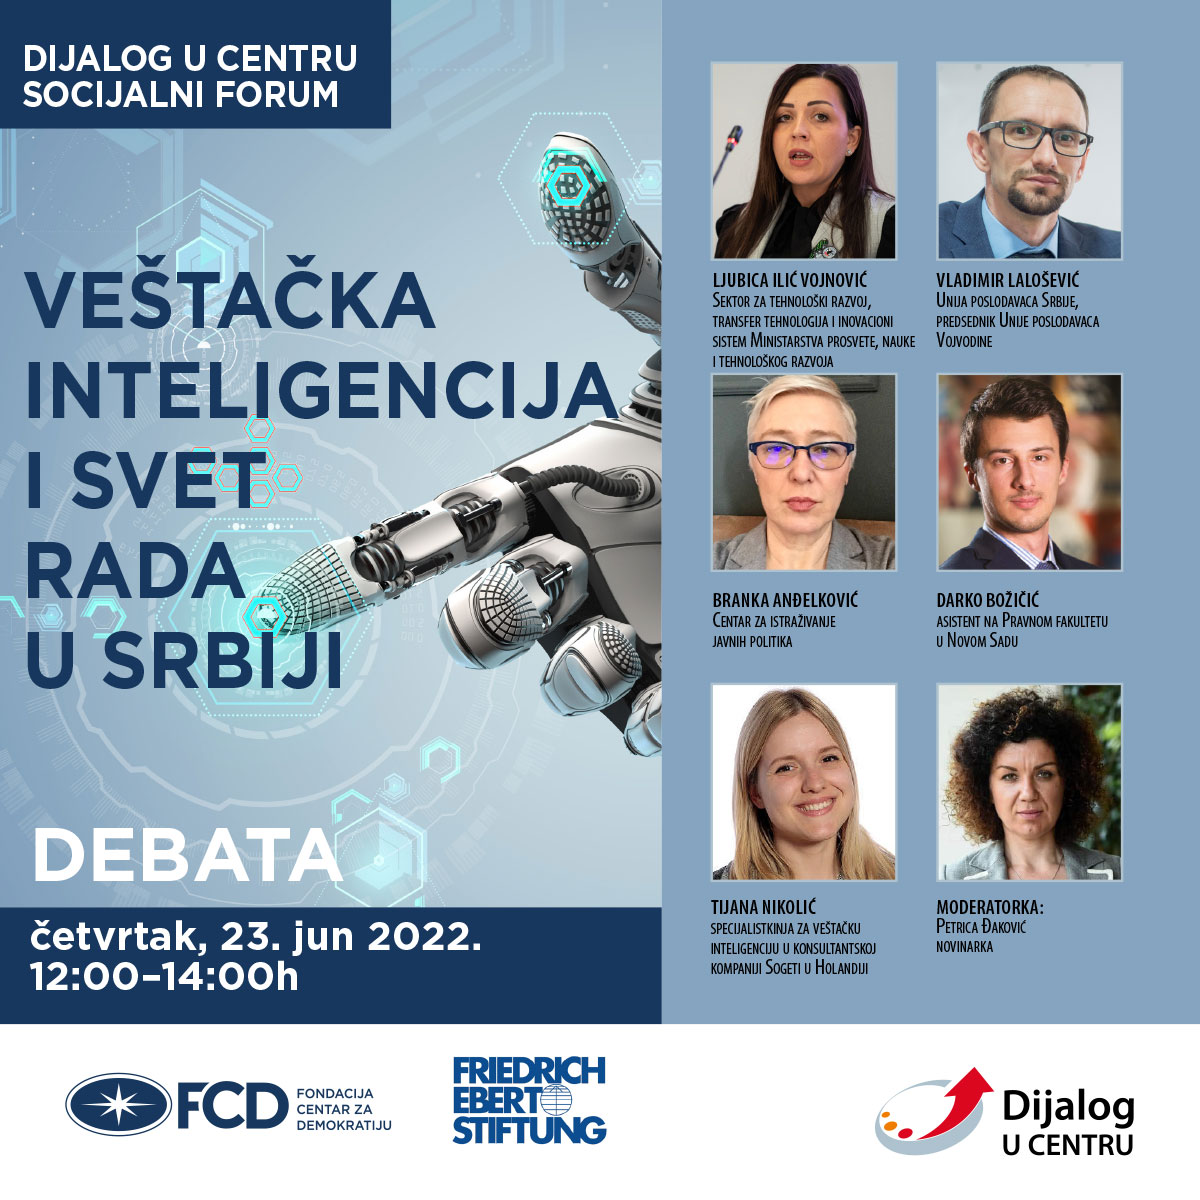 Debata „Veštačka inteligencija i svet rada u Srbiji“ (FOTO, VIDEO)